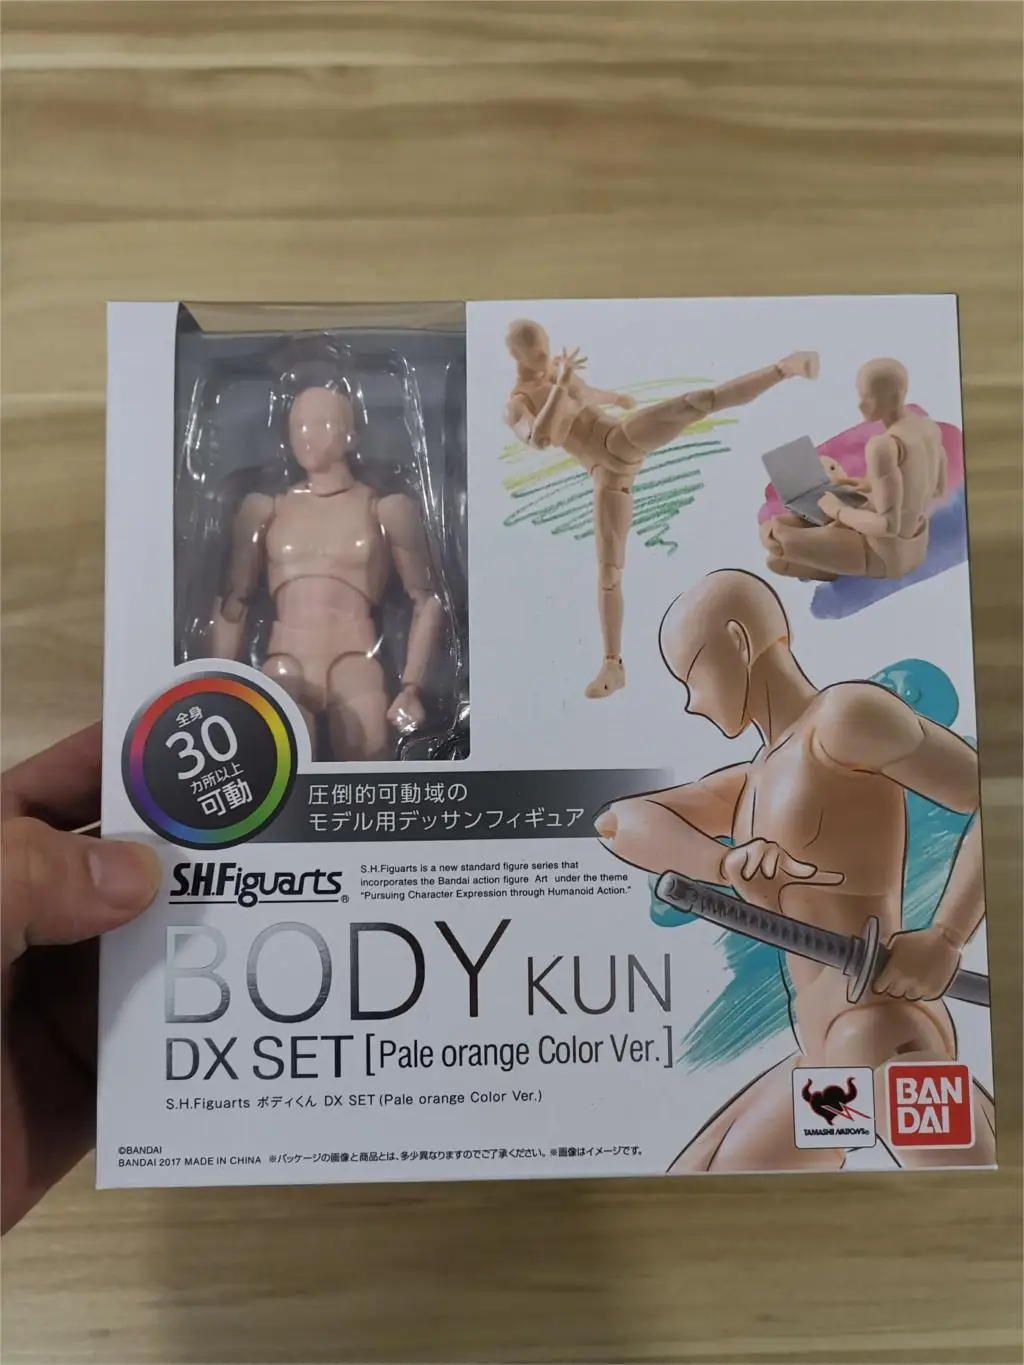 

Original DIY BODY KUN & BODY CHAN DX SET Pale Orange Color Ver. PVC BJD Action Collectible Model Toys